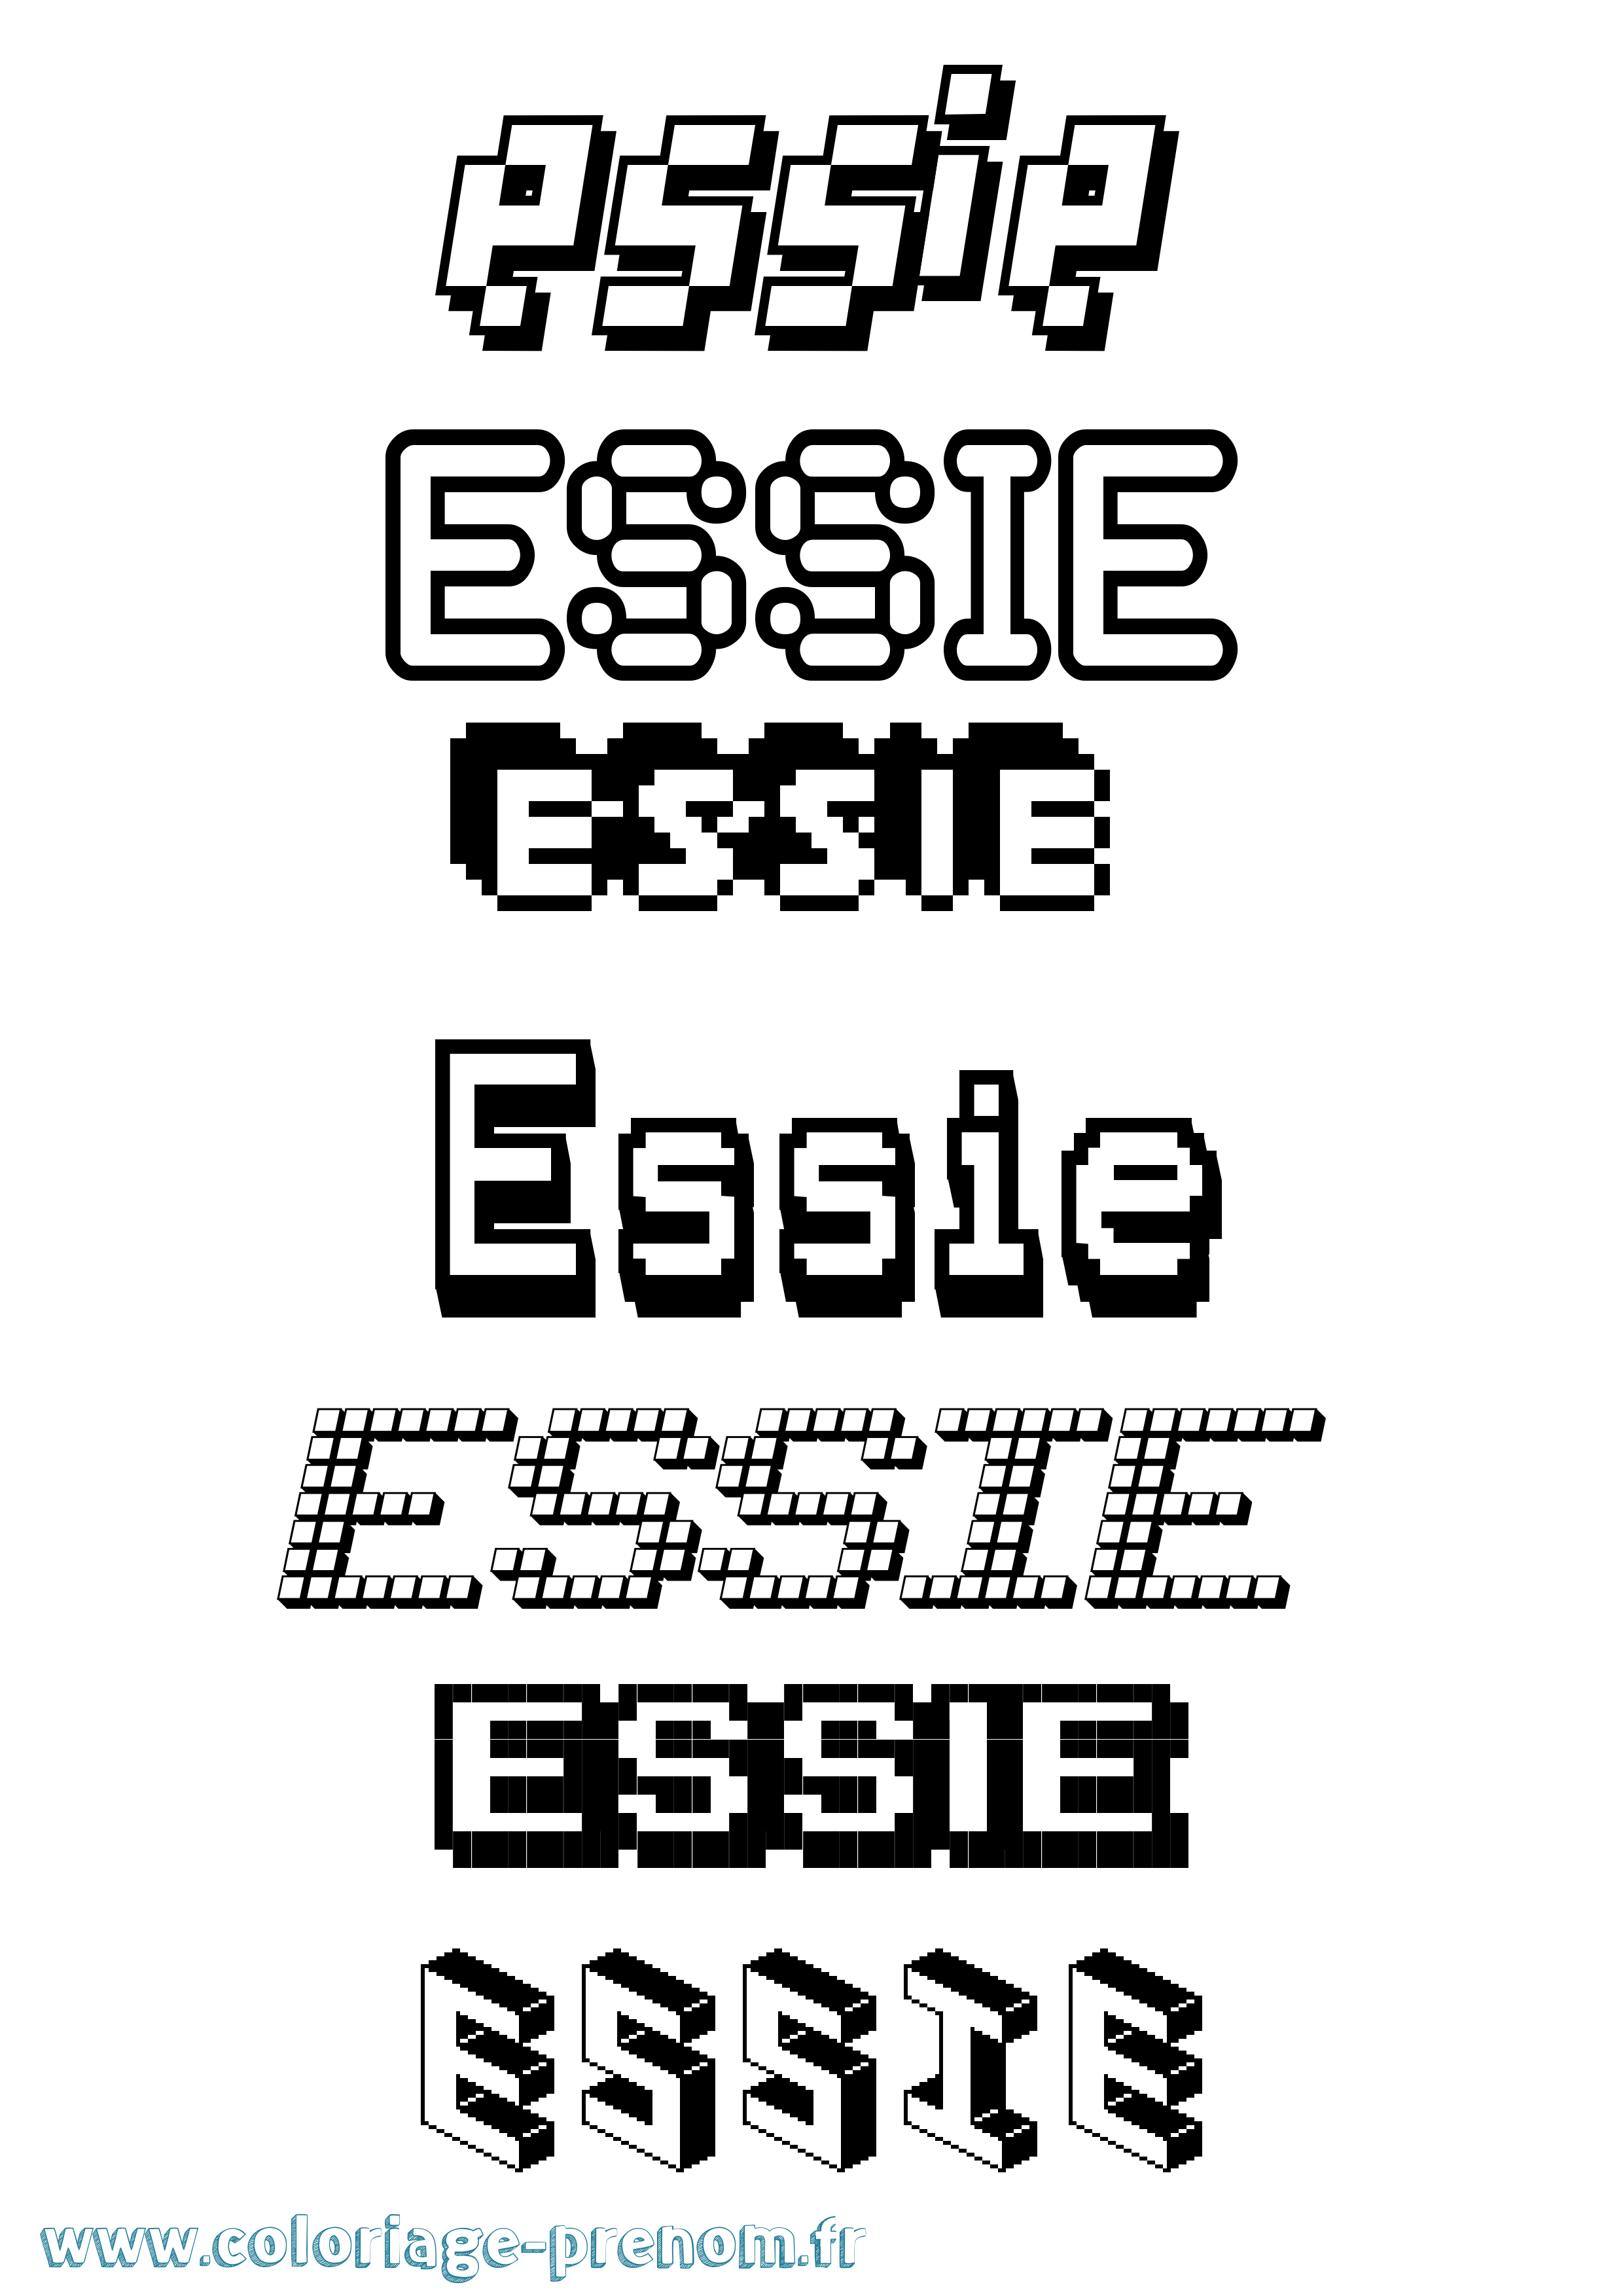 Coloriage prénom Essie Pixel